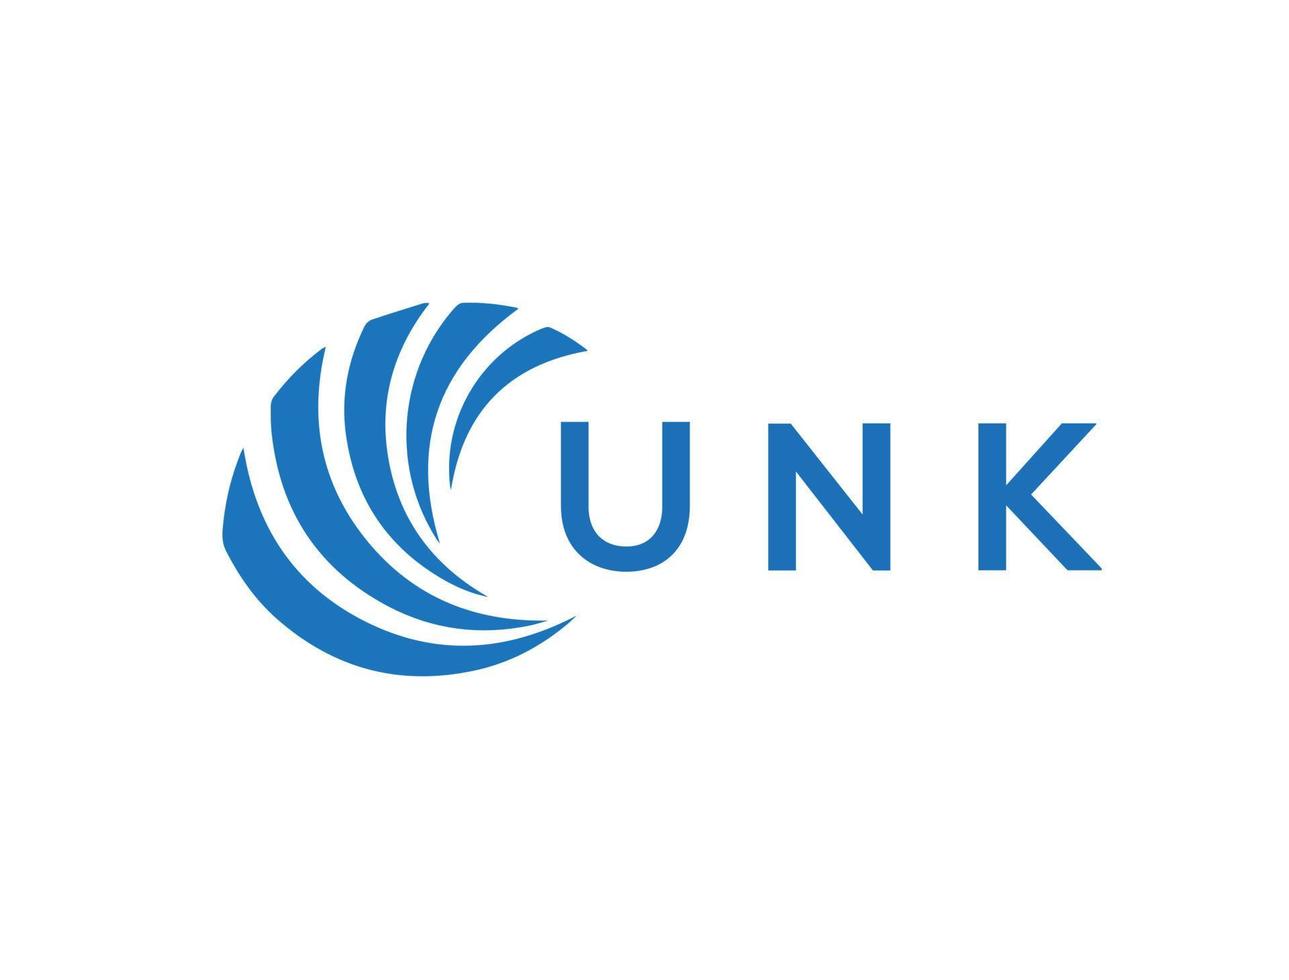 UNK letter logo design on white background. UNK creative circle letter logo concept. UNK letter design. vector